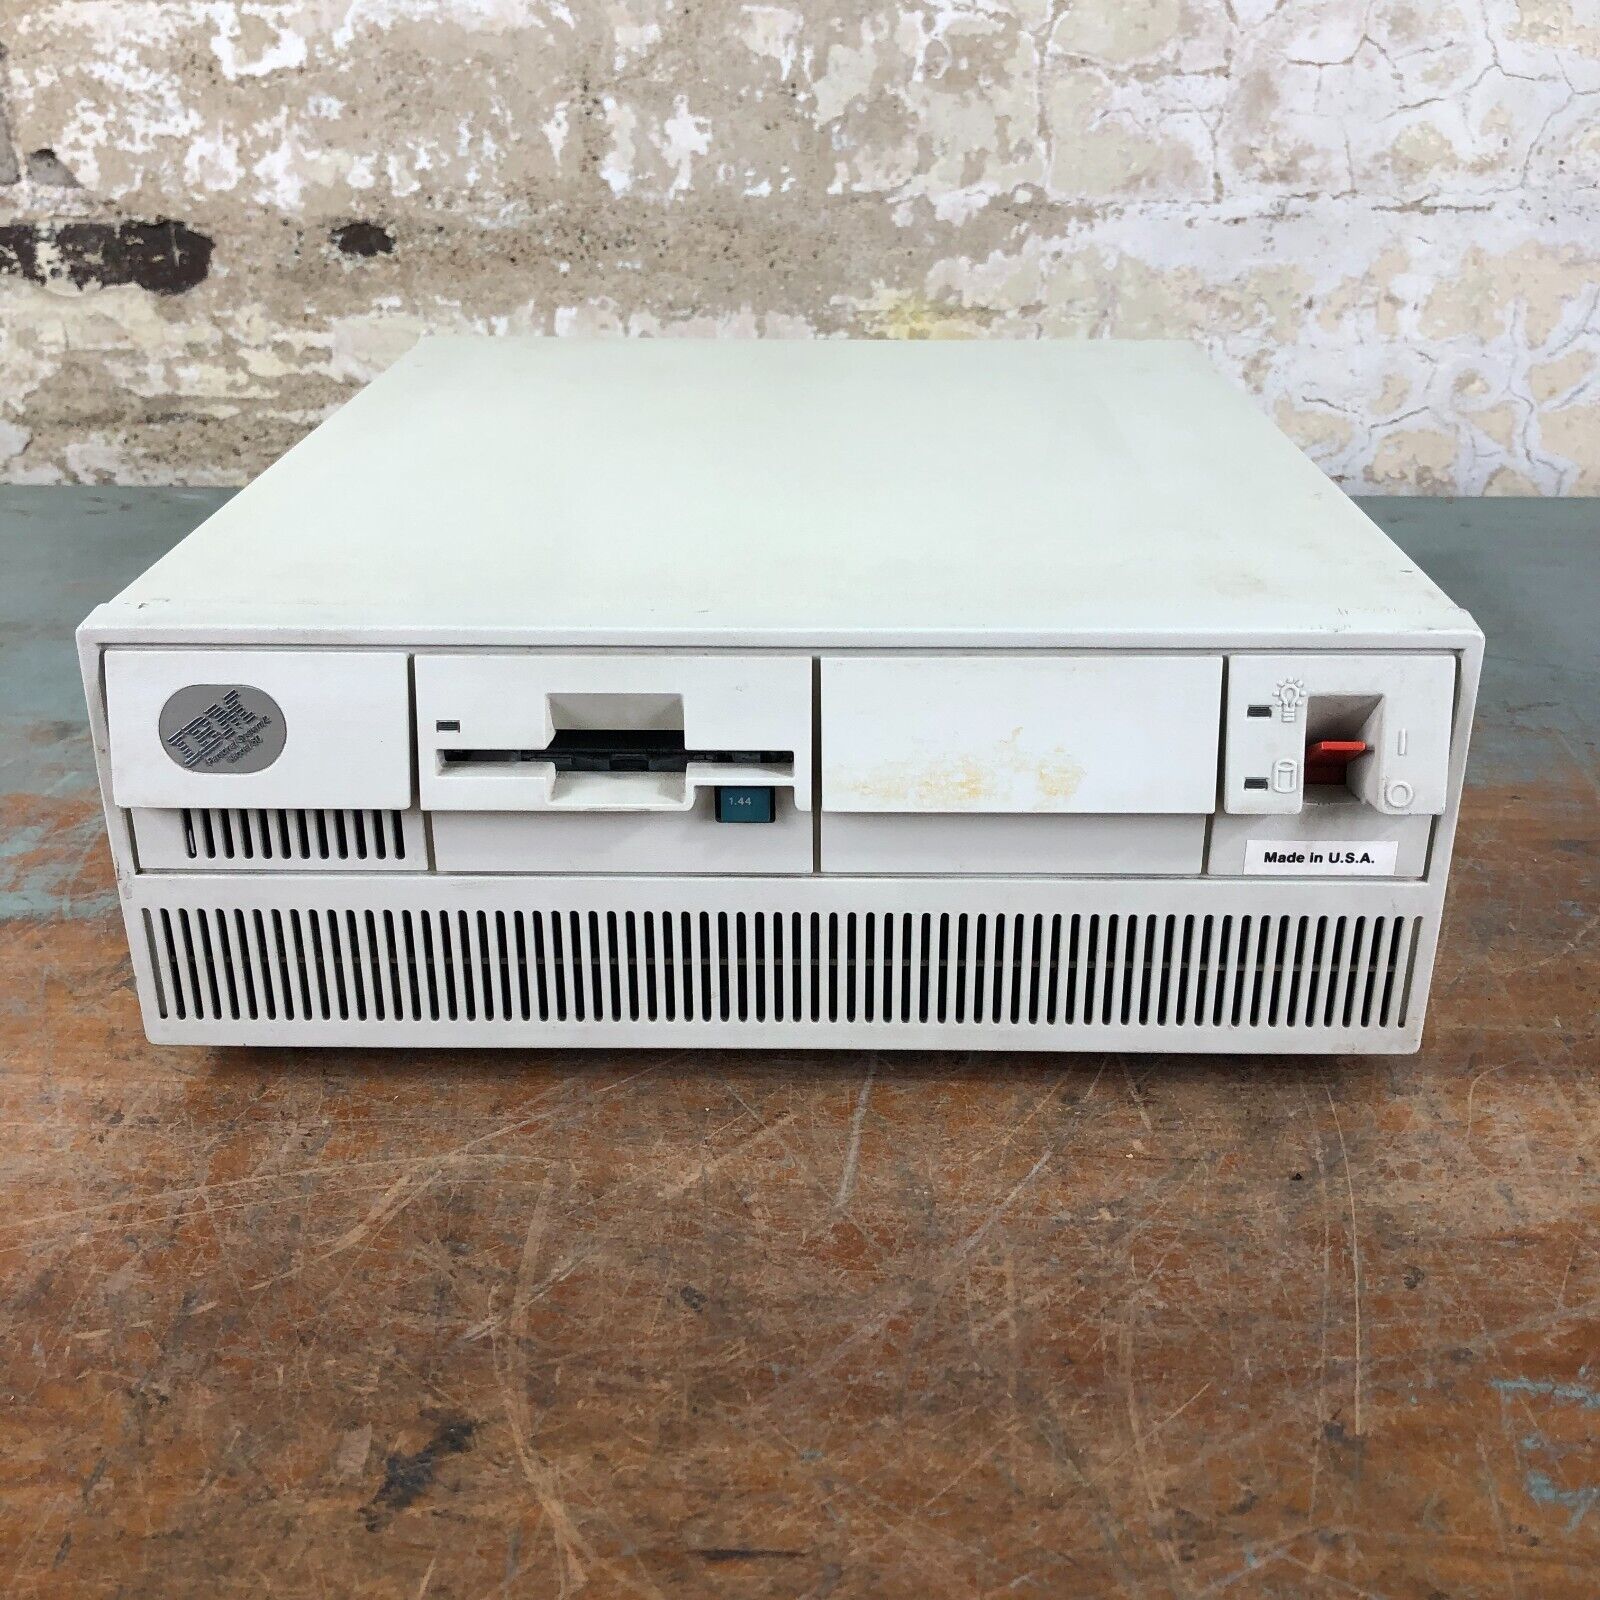 IBM PS/2 Model 50 Computer 8550 **Great Restoration Candidate - Complete